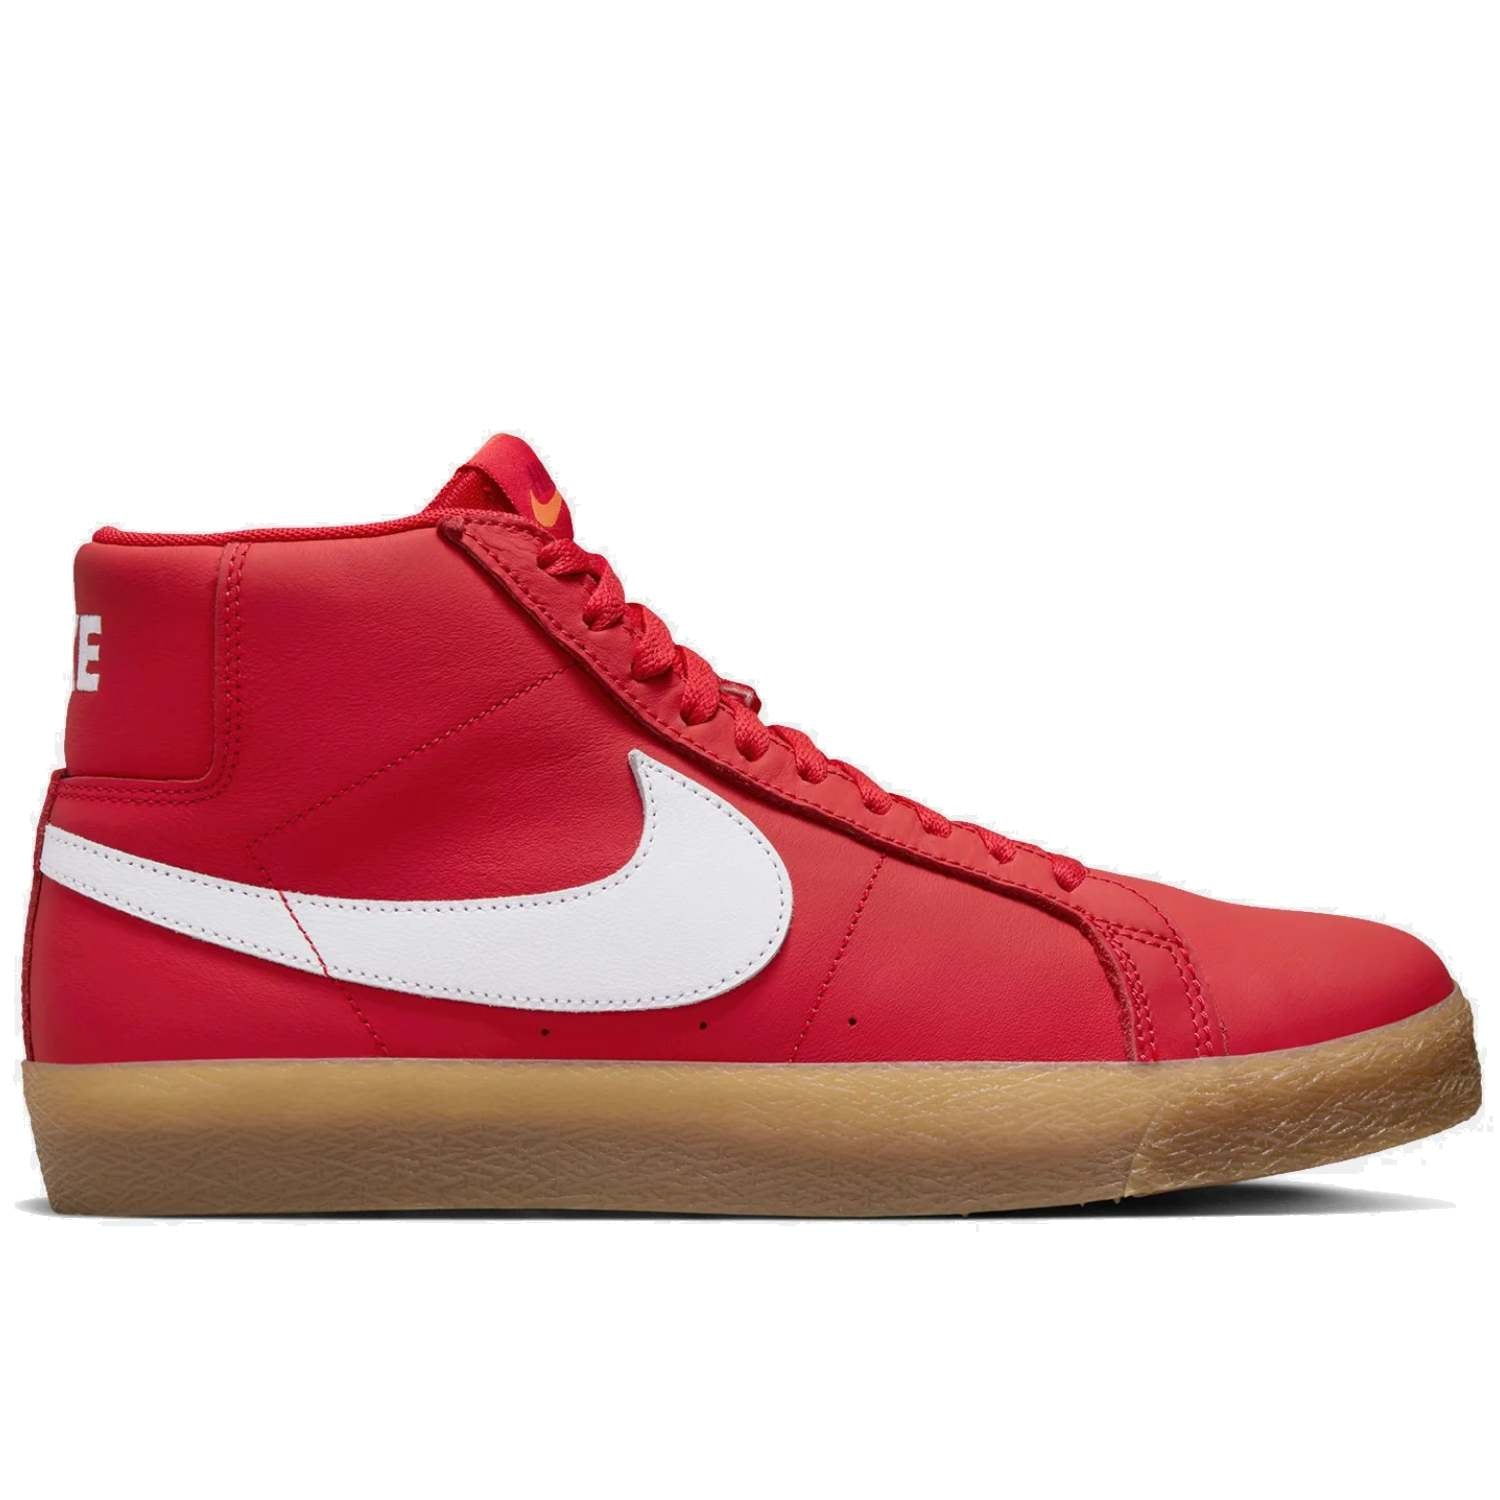 Nike SB - Zoom Blazer Mid - FJ1680-600 Red Leather Upper Gum Sole Skate Shoe